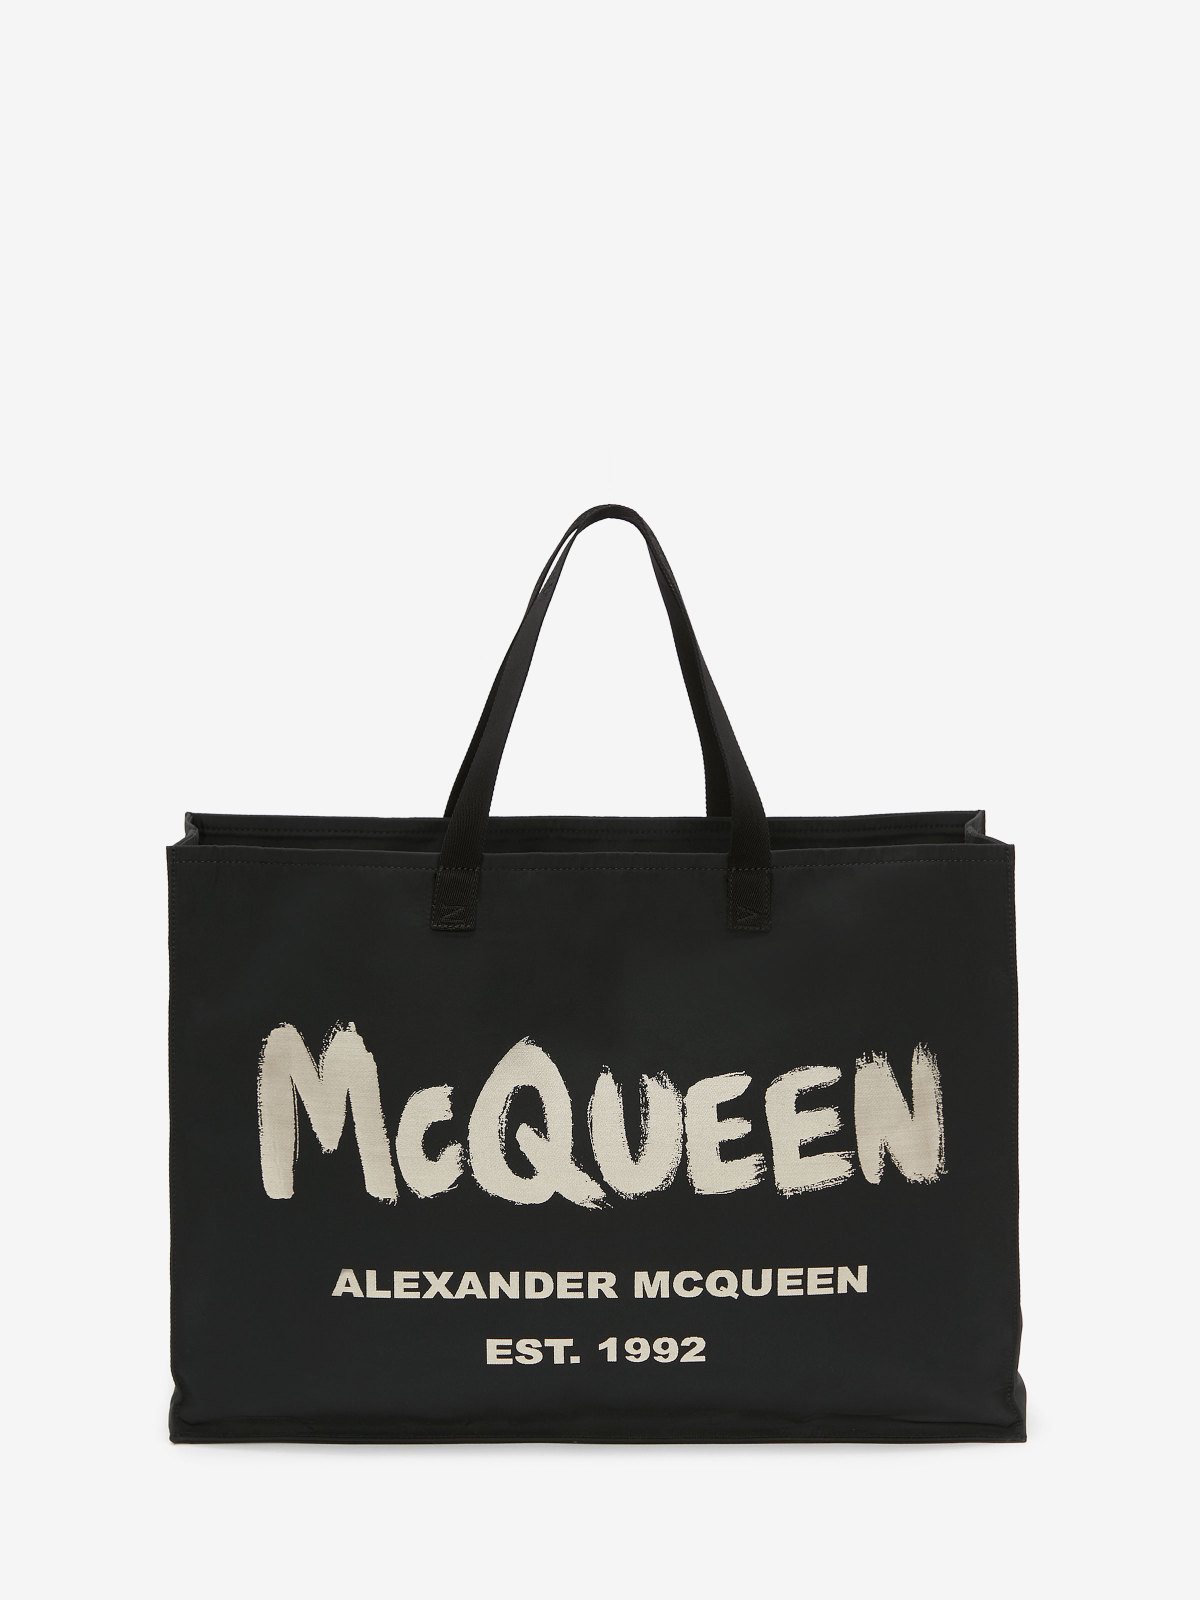 Alexander McQueen: Men’s Christmas Gift Guide 2021